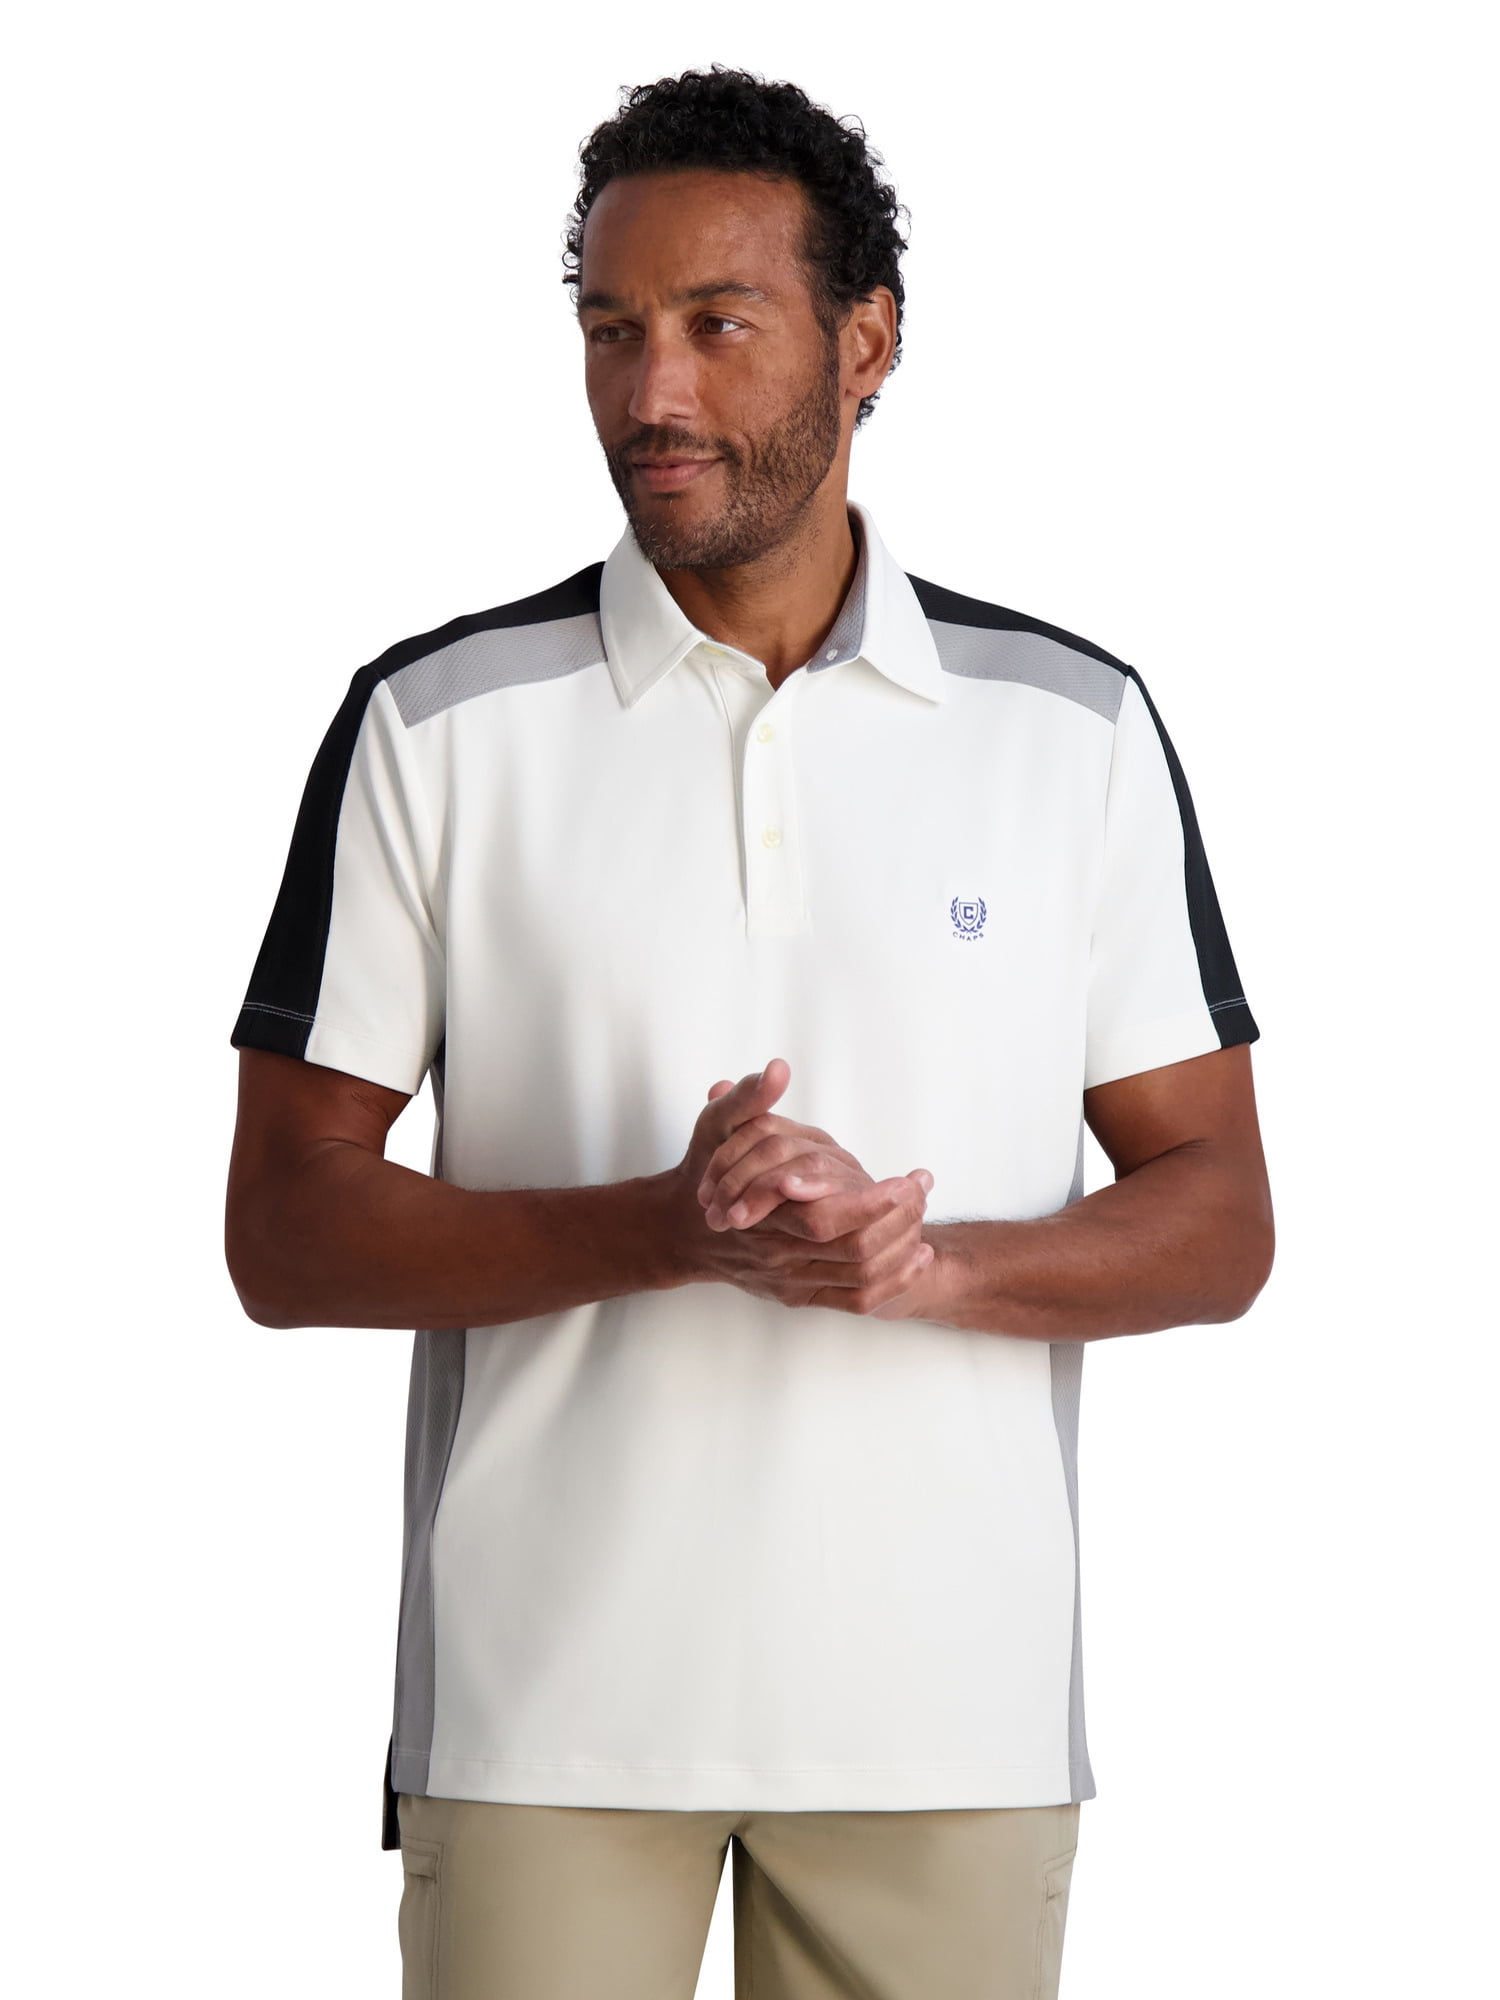 Chaps Men's Mesh Colorblock Golf Polo - Sizes S up to 3XL - Walmart.com